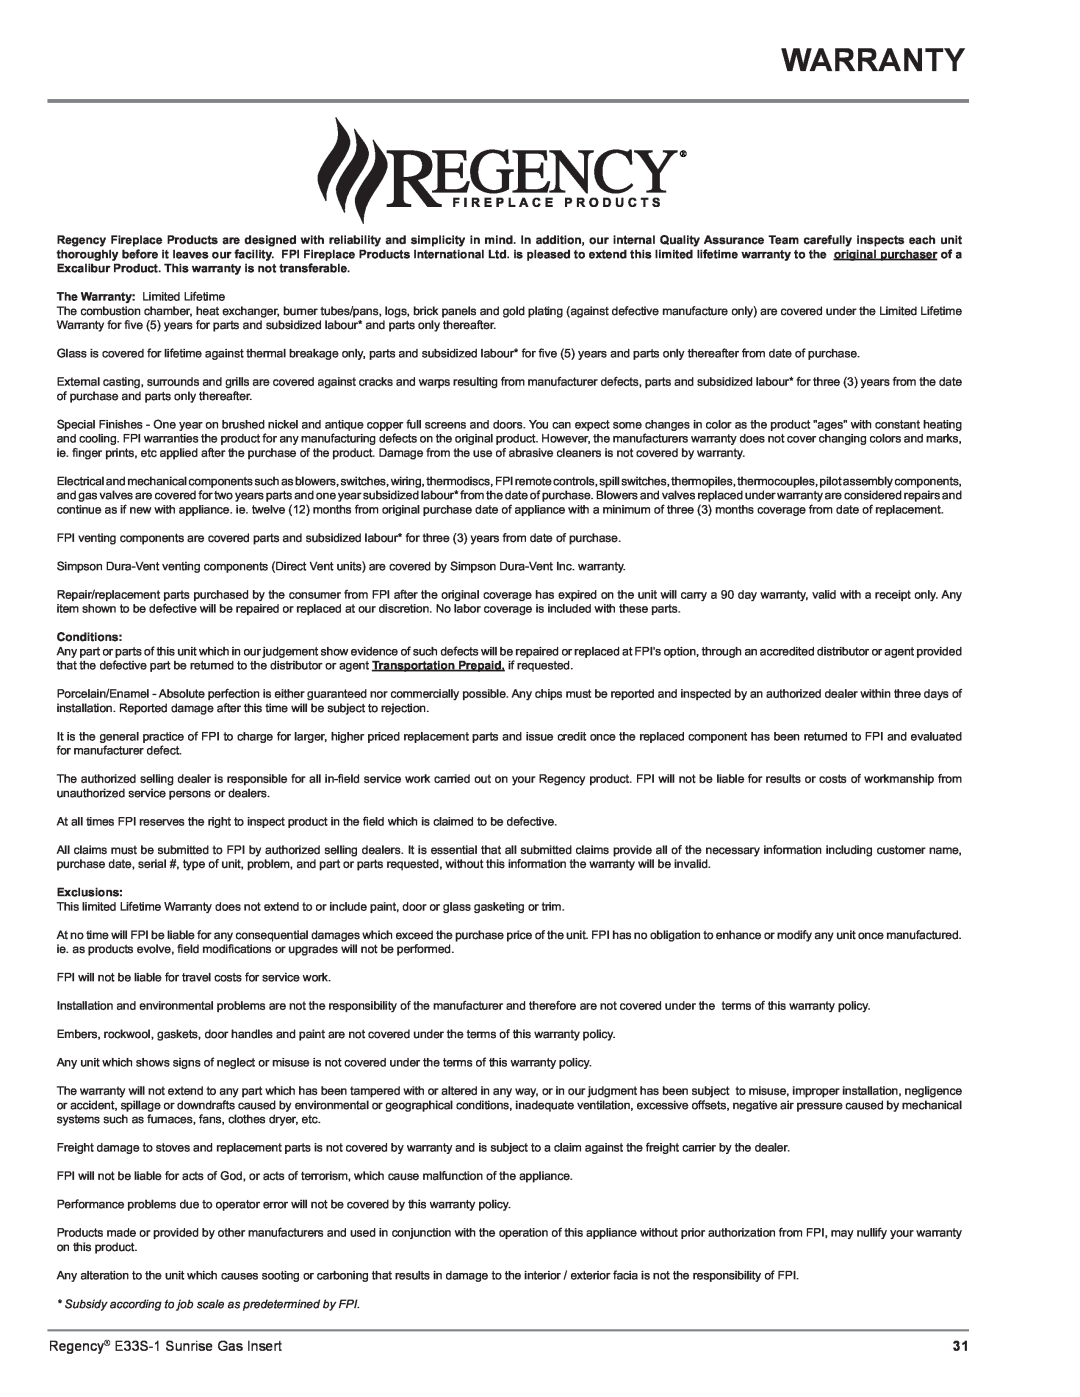 Regency E33S installation manual Warranty, Conditions, Exclusions 